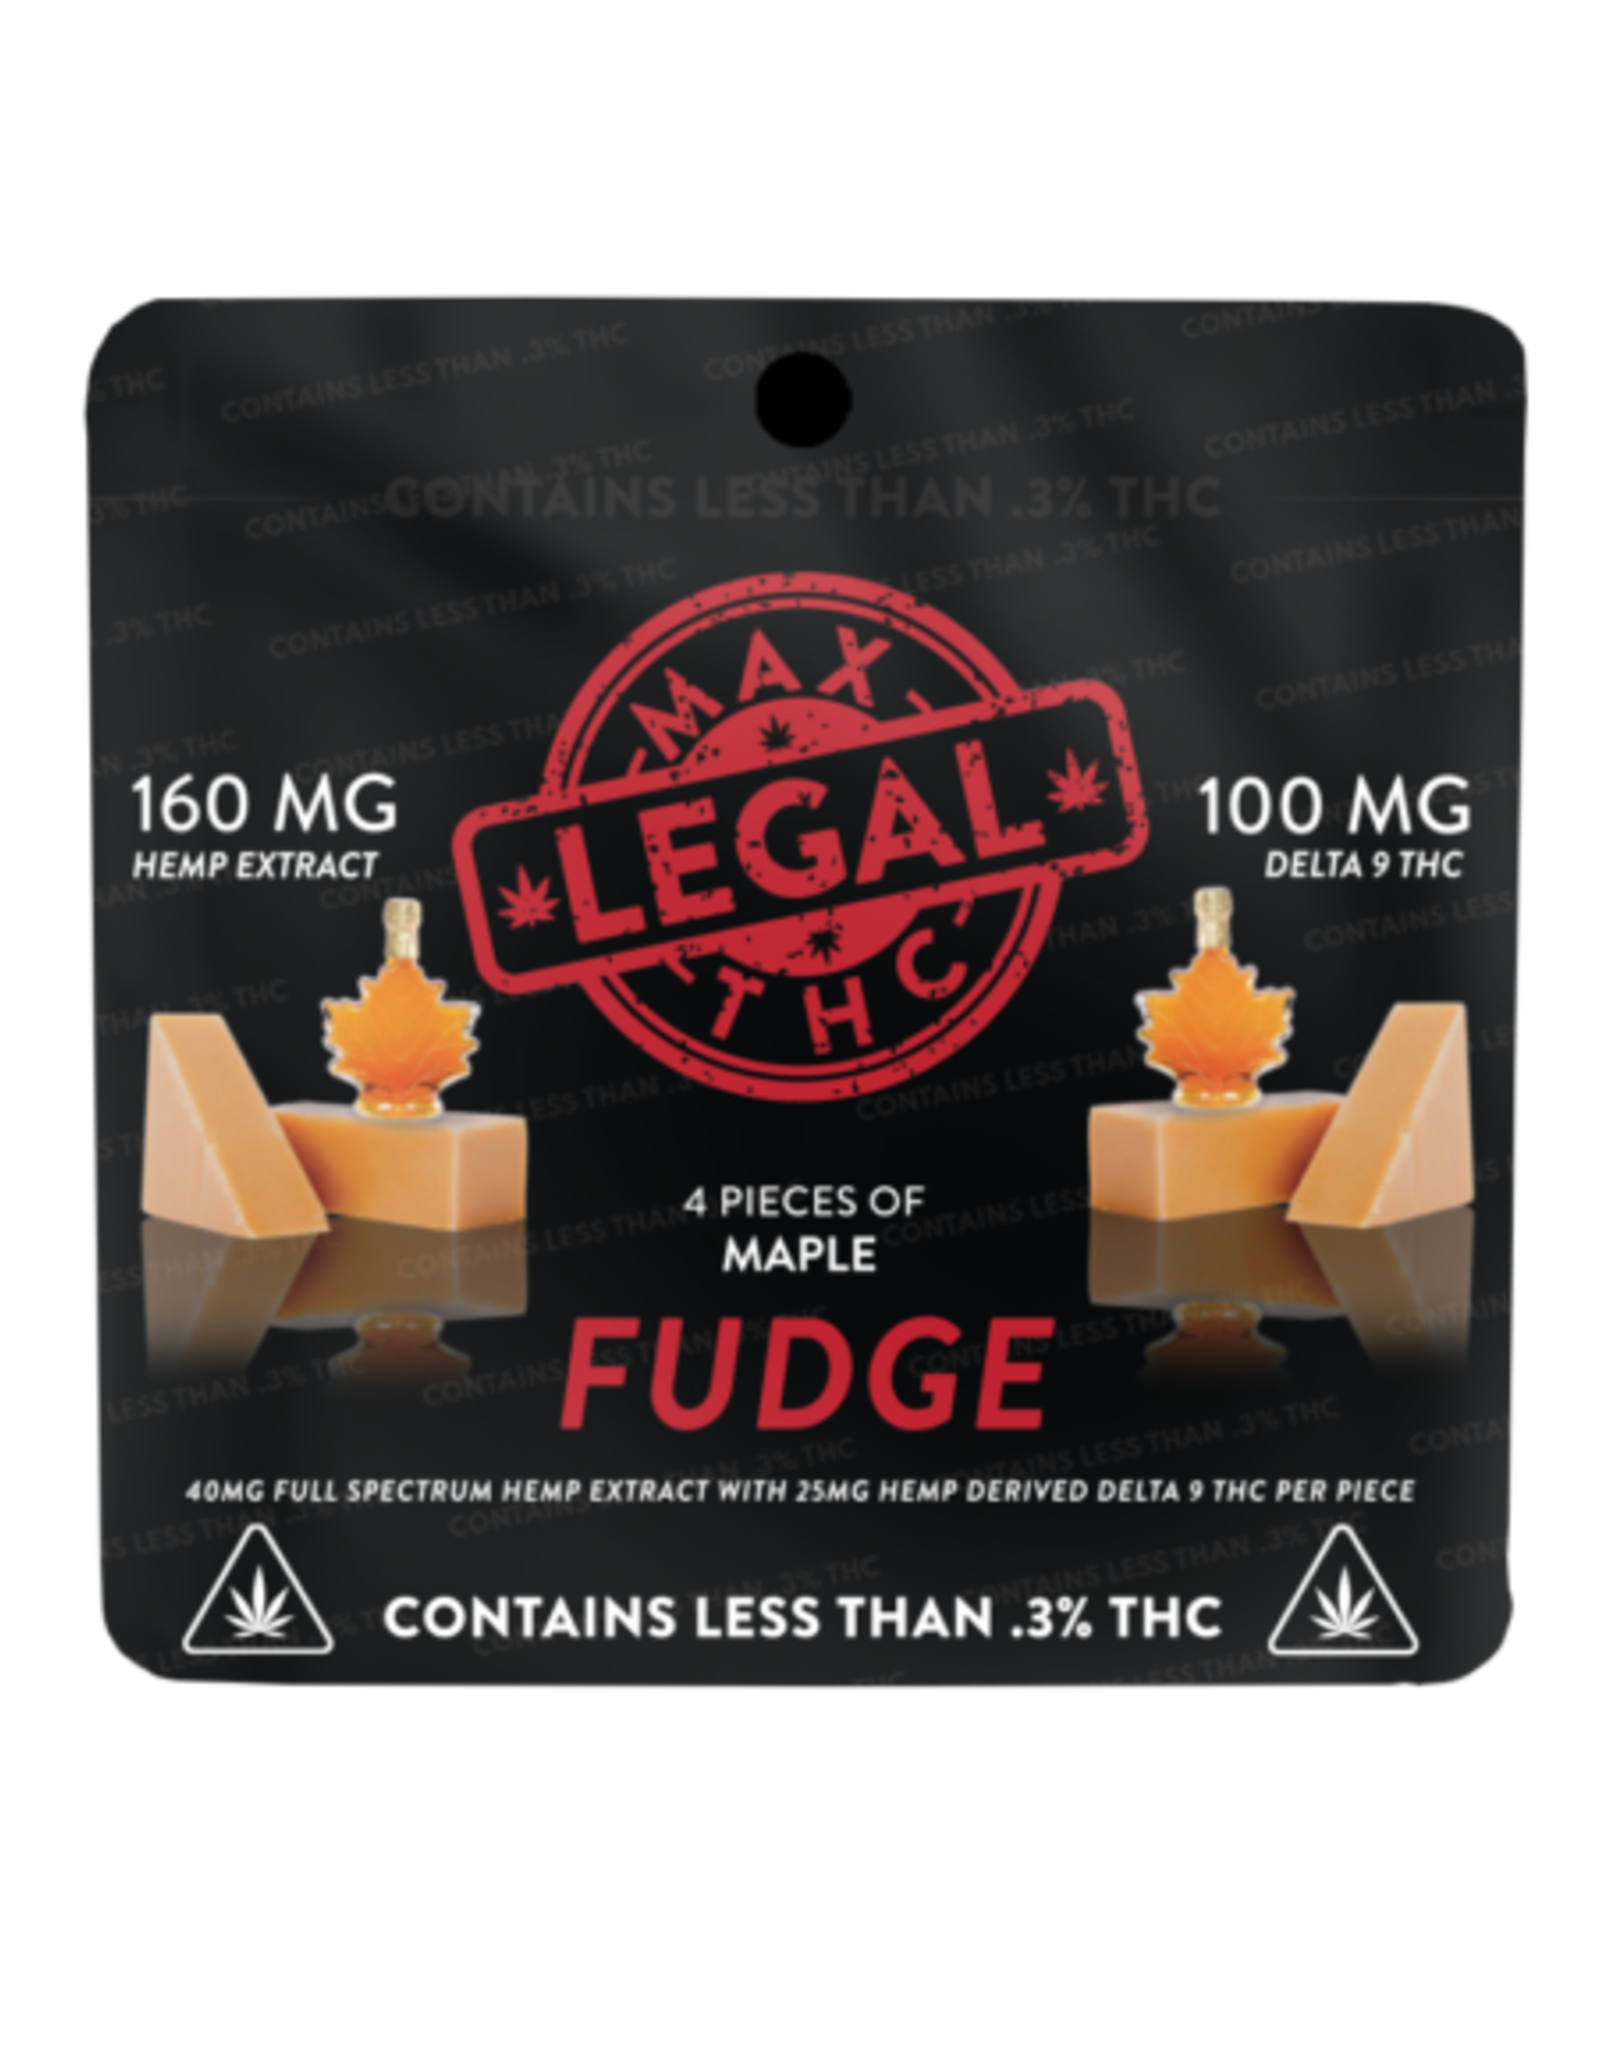 Max Legal THC Maple Fudge - Hemp Derived Delta 9 THC